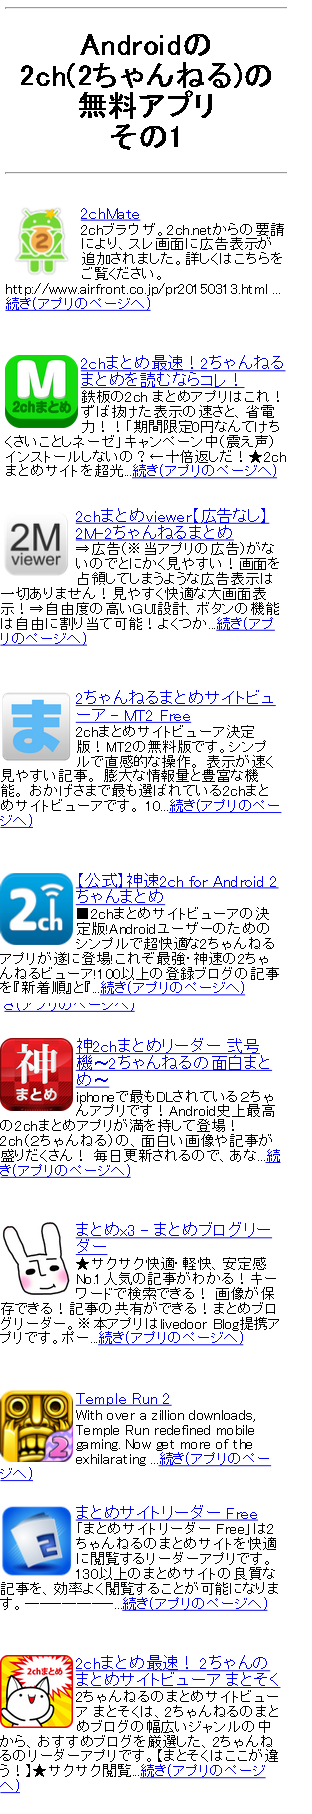 Android Iphoneの無料2ch ちゃんねる アプリ 無料テトリスアプリ